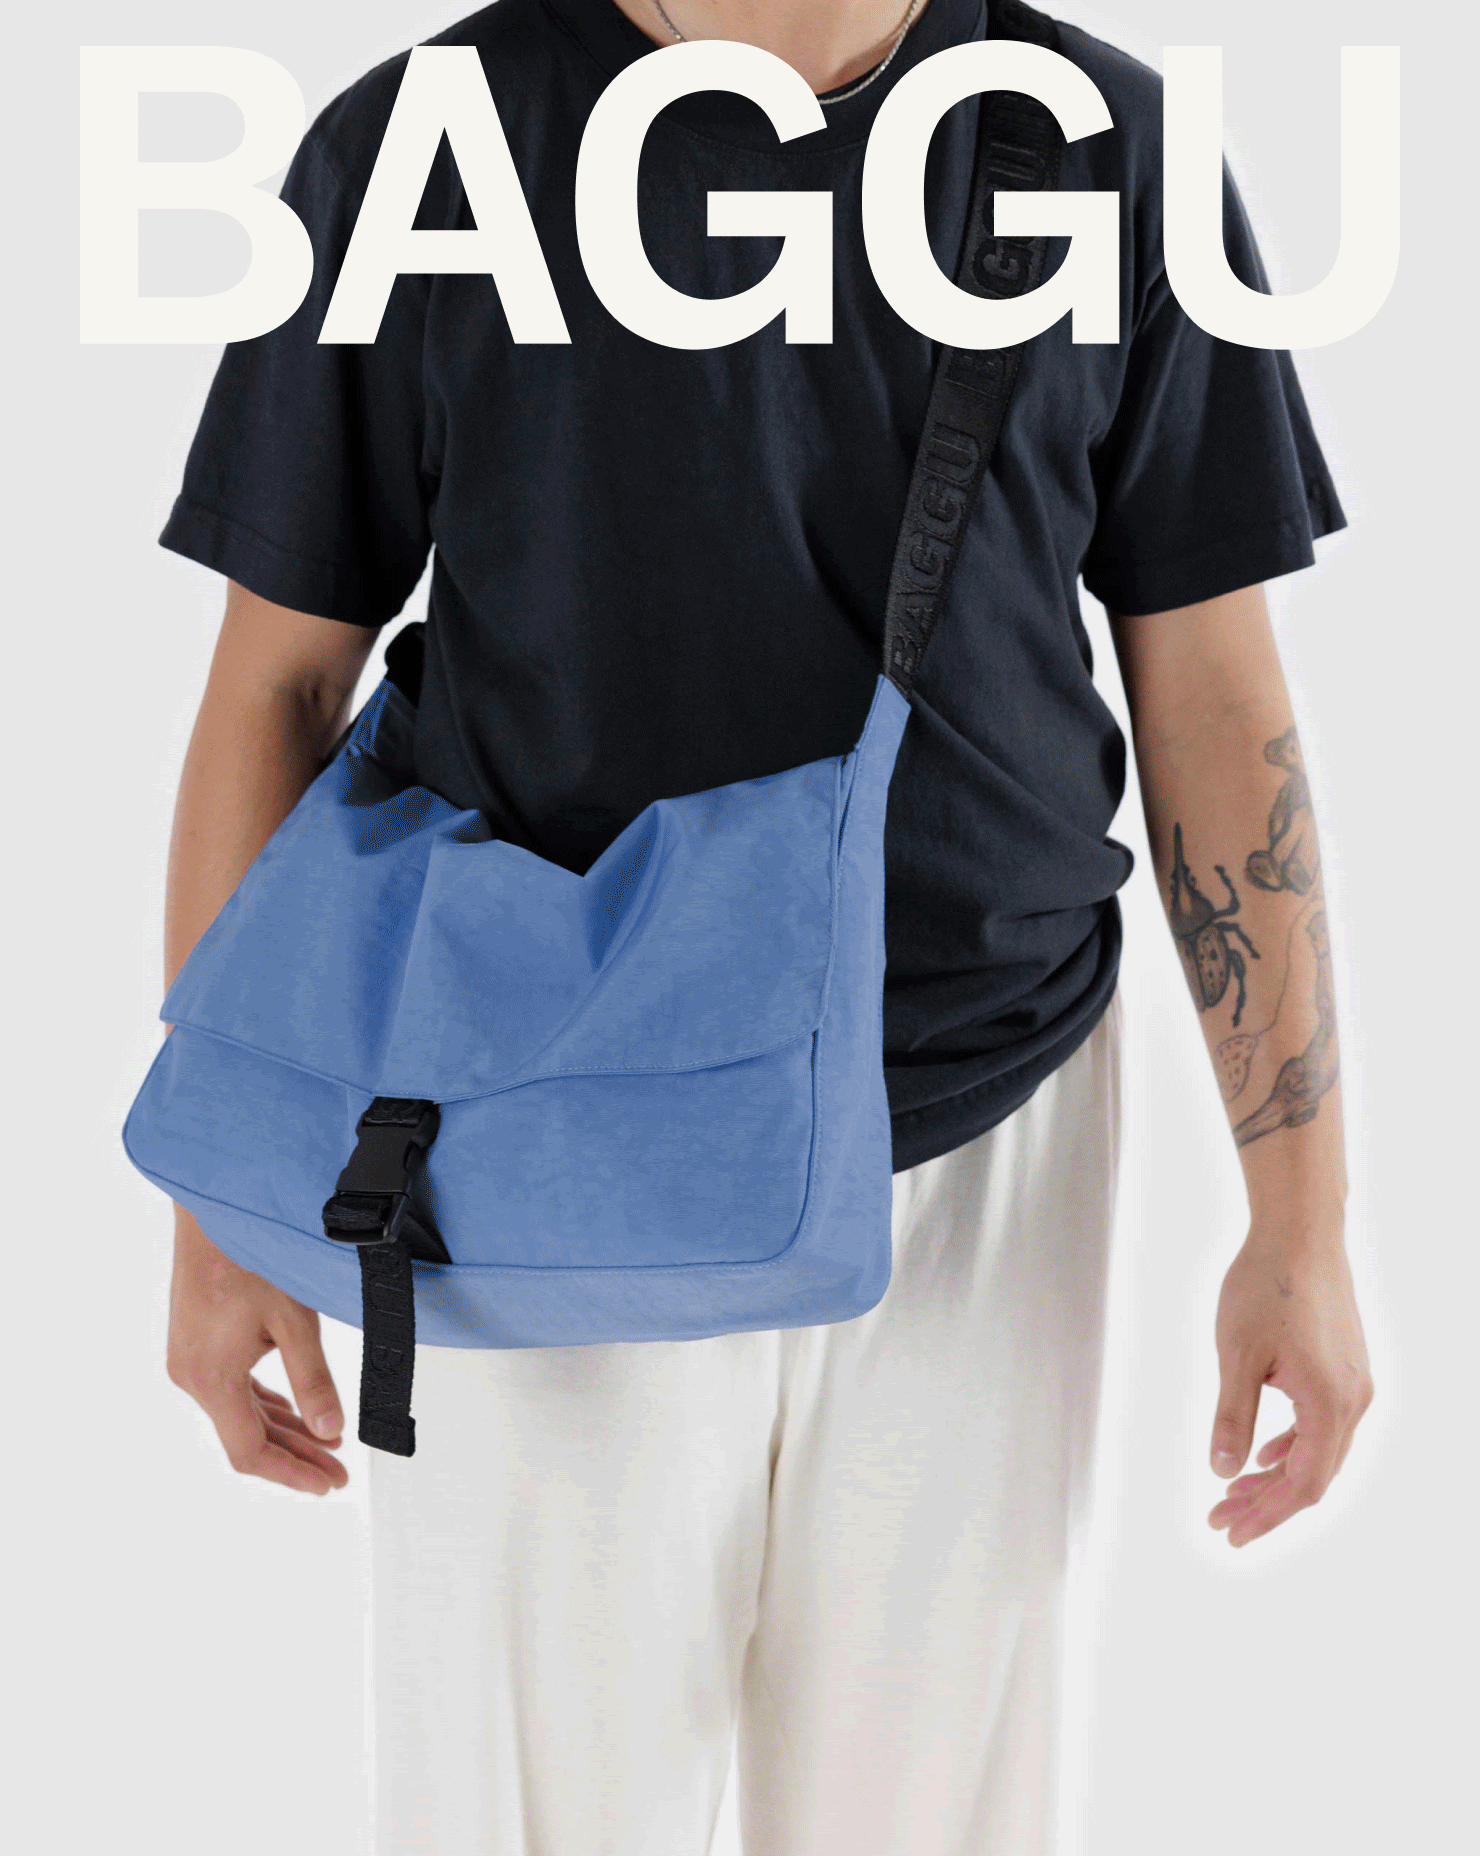 BAGGU Nylon Messenger Bag - Candy Apple - Preston Apothecary